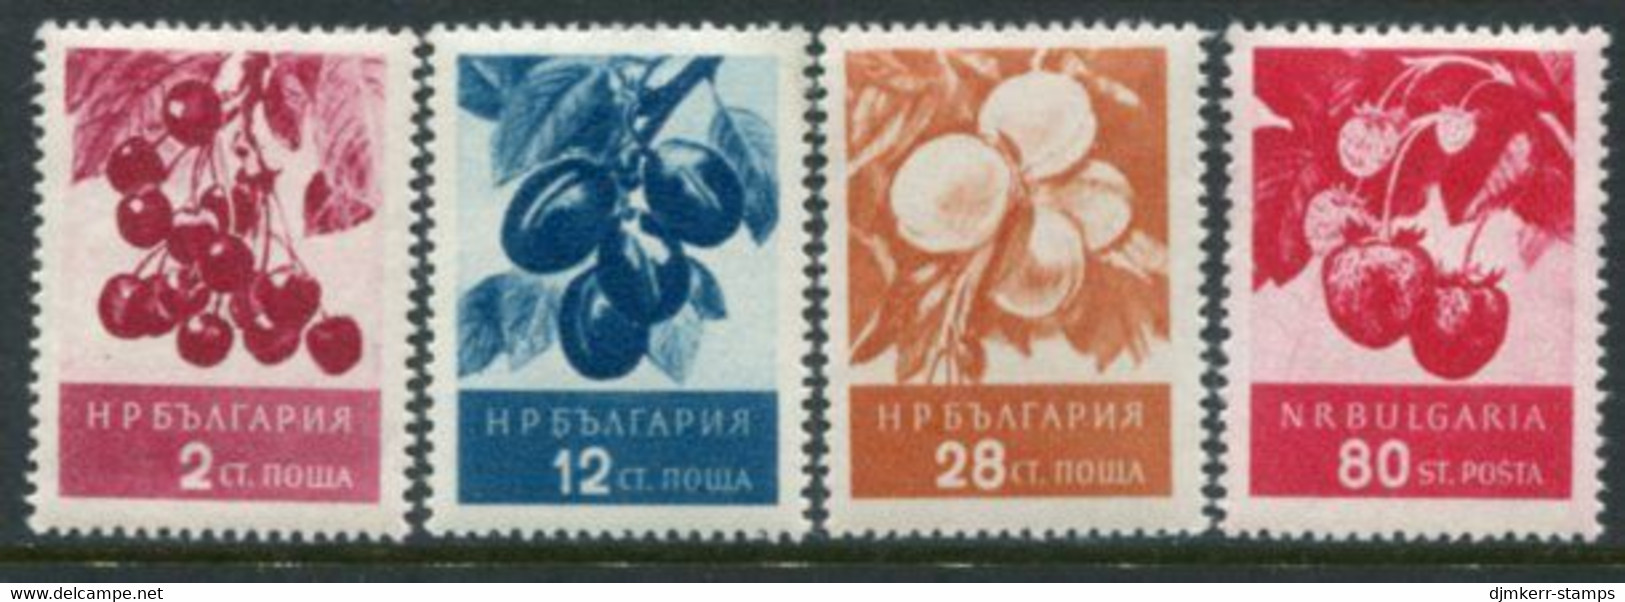 BULGARIA 1956 Fruits II MNH / **.  Michel 990-93 - Nuovi